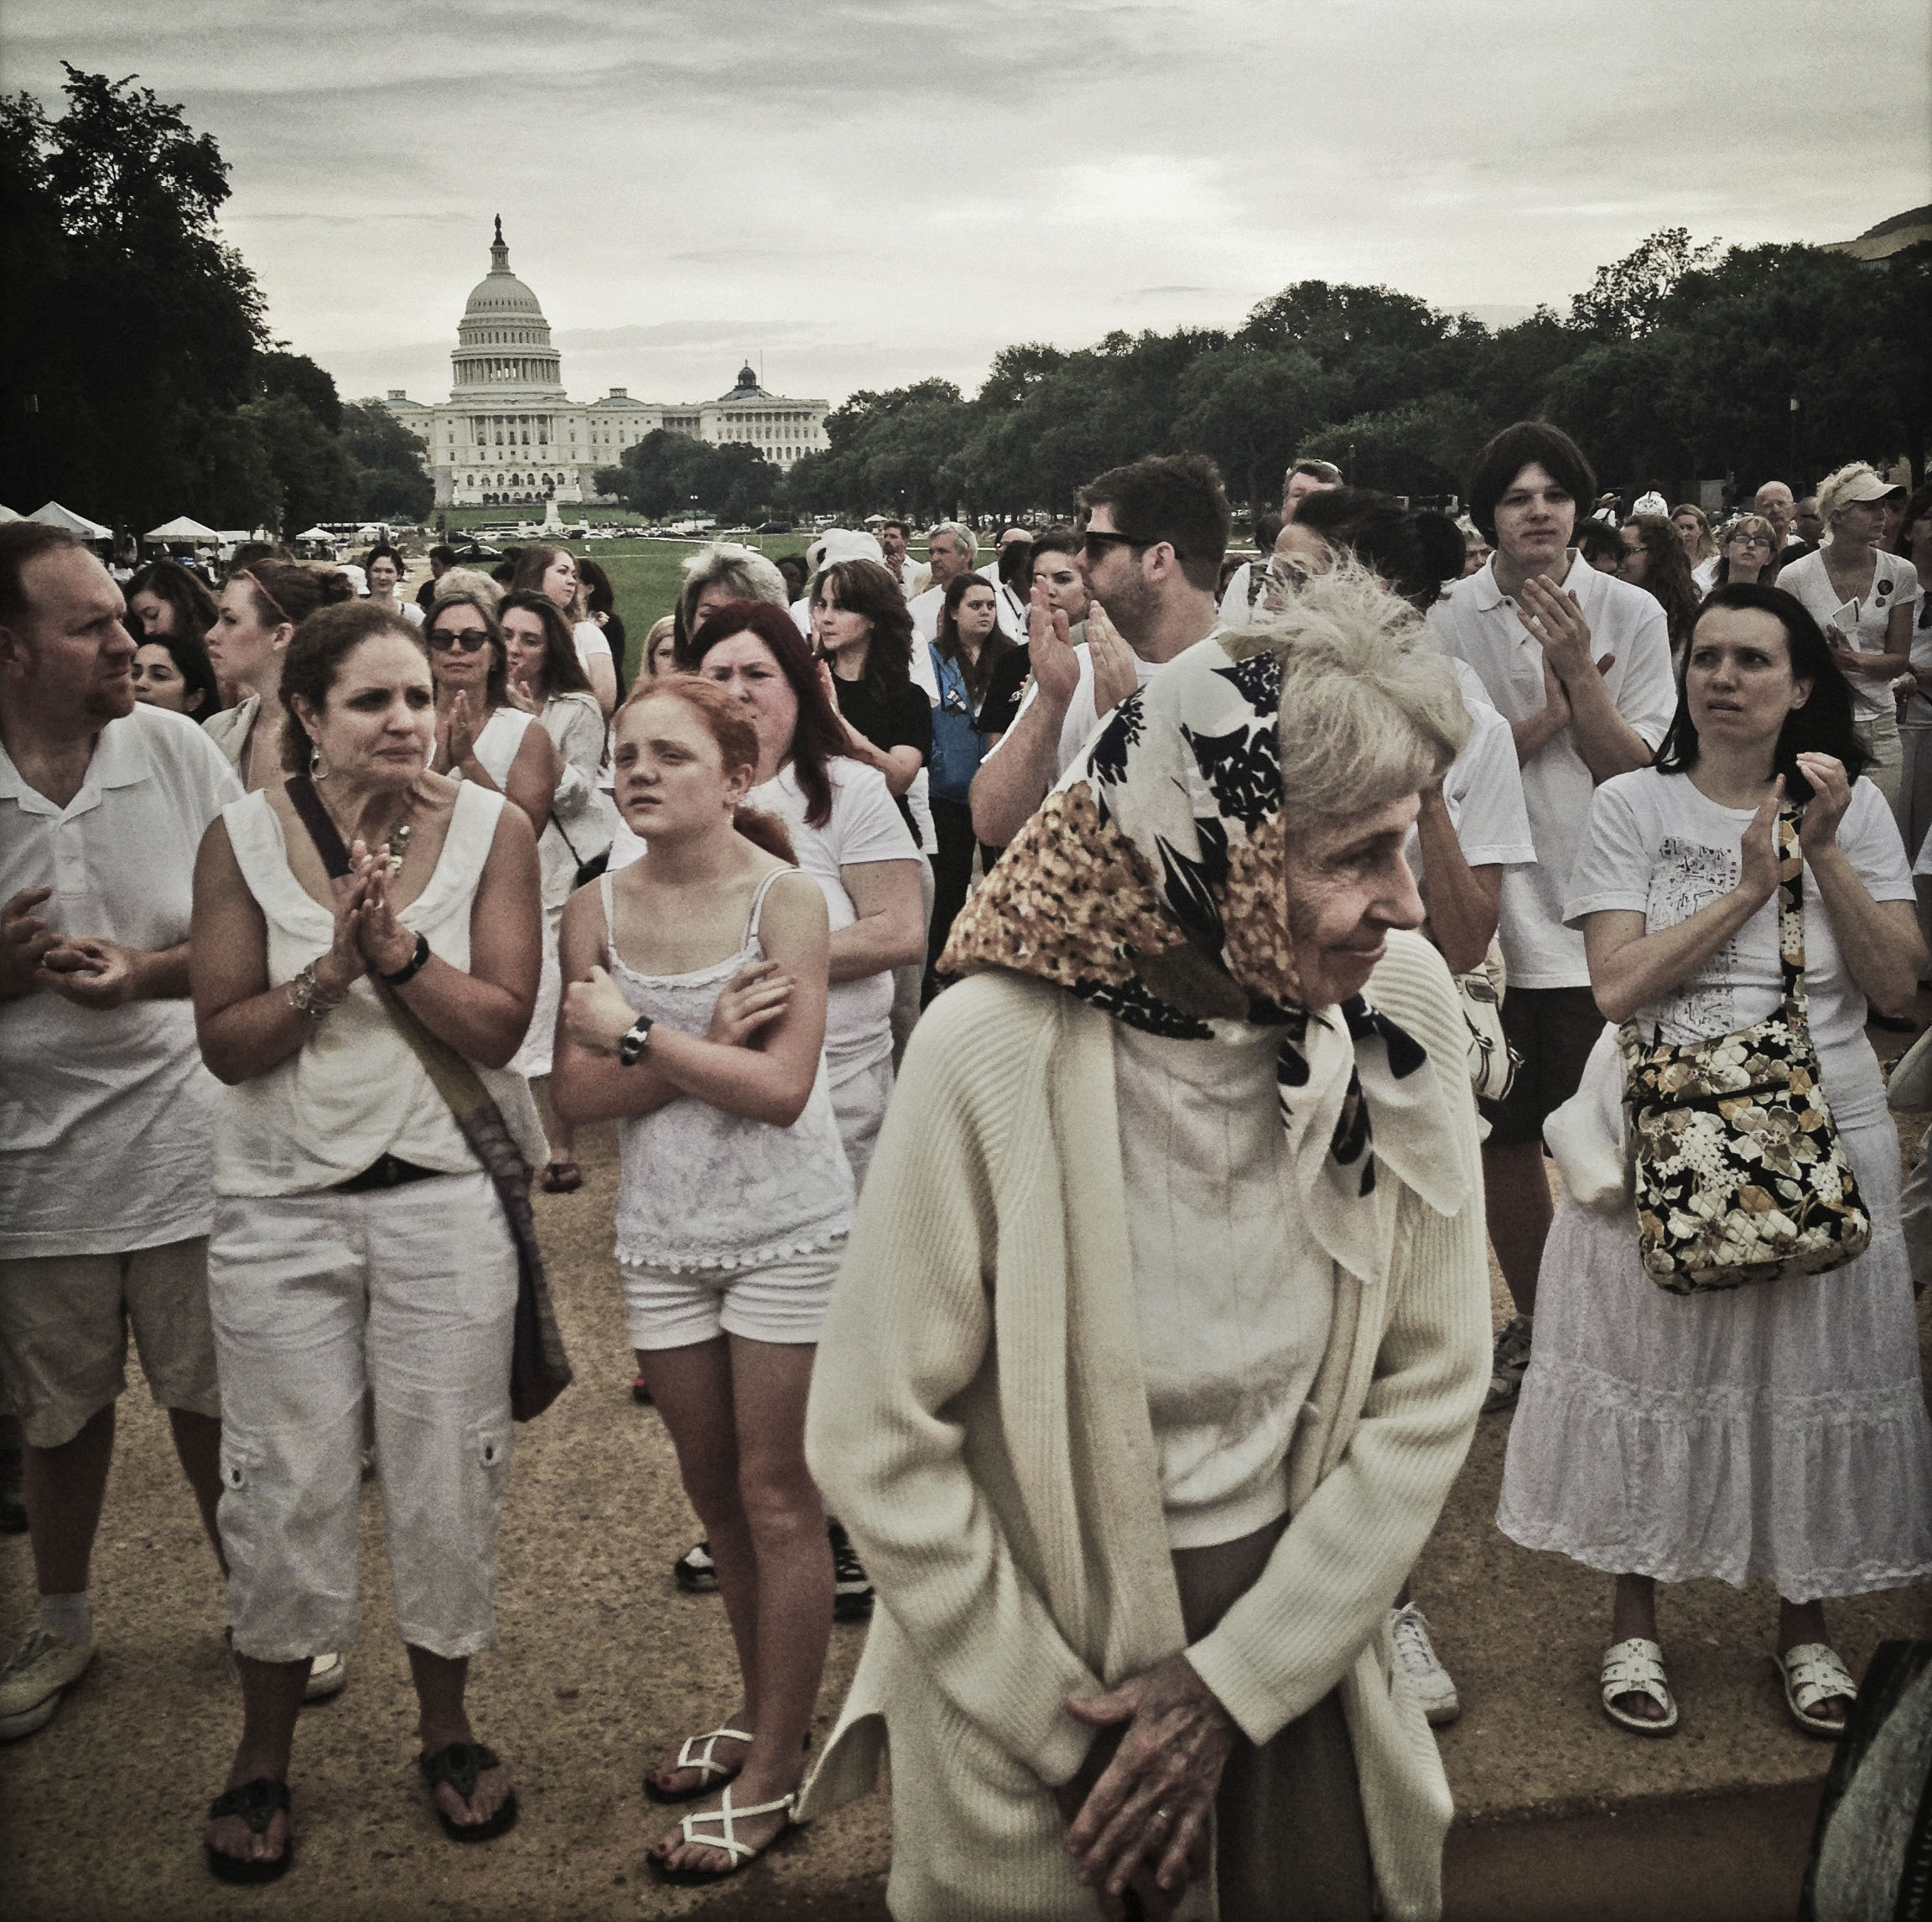 Participants at the One Million Bones installation on the National Mall in Washington DC. Photo: Teru Kuwayama